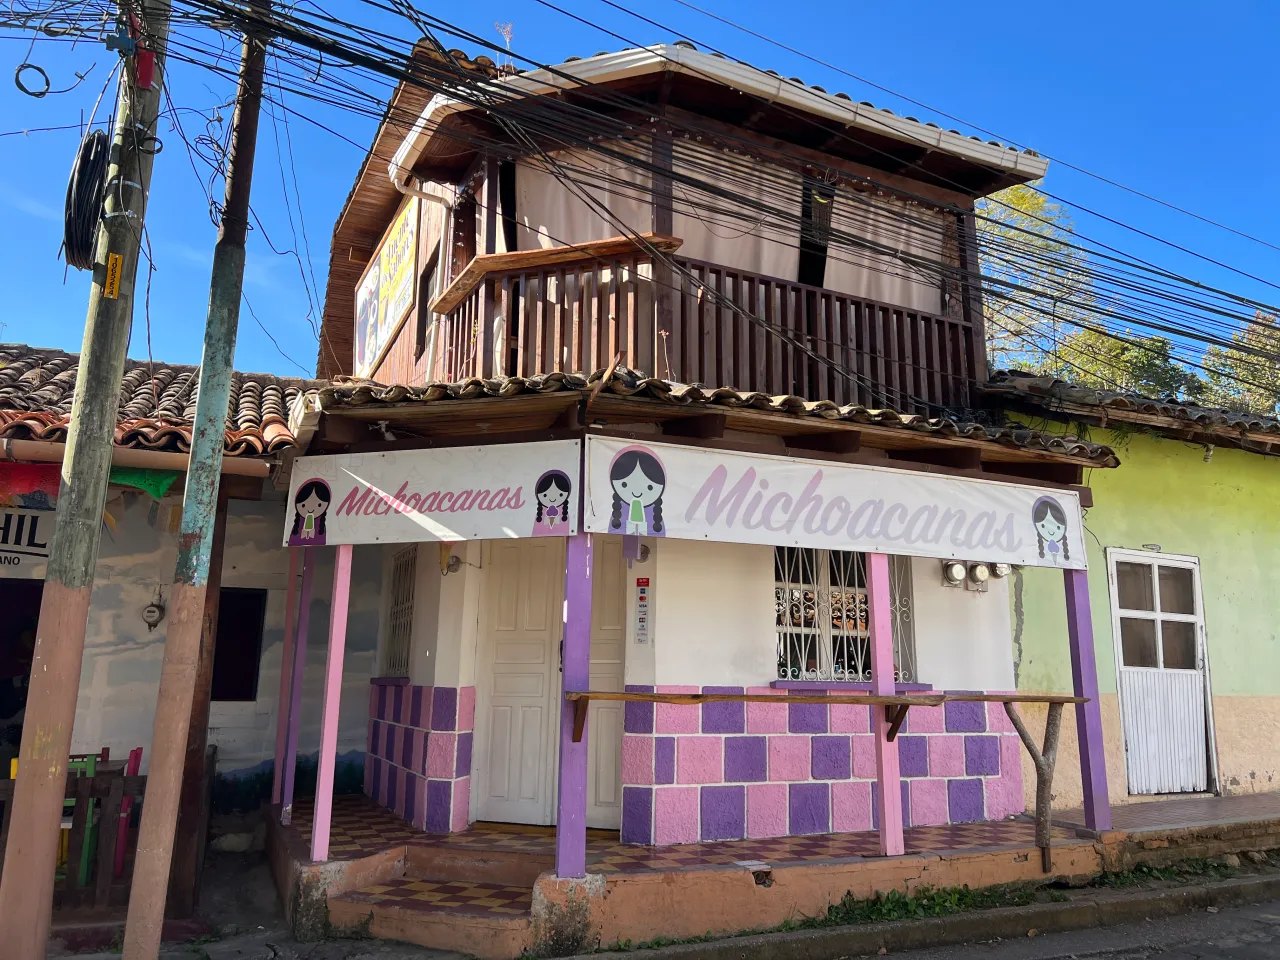 Se vende casa ubicada en Valle de Ángeles, cuenta con un área perfecta restaurante o café, con fachada de madera.